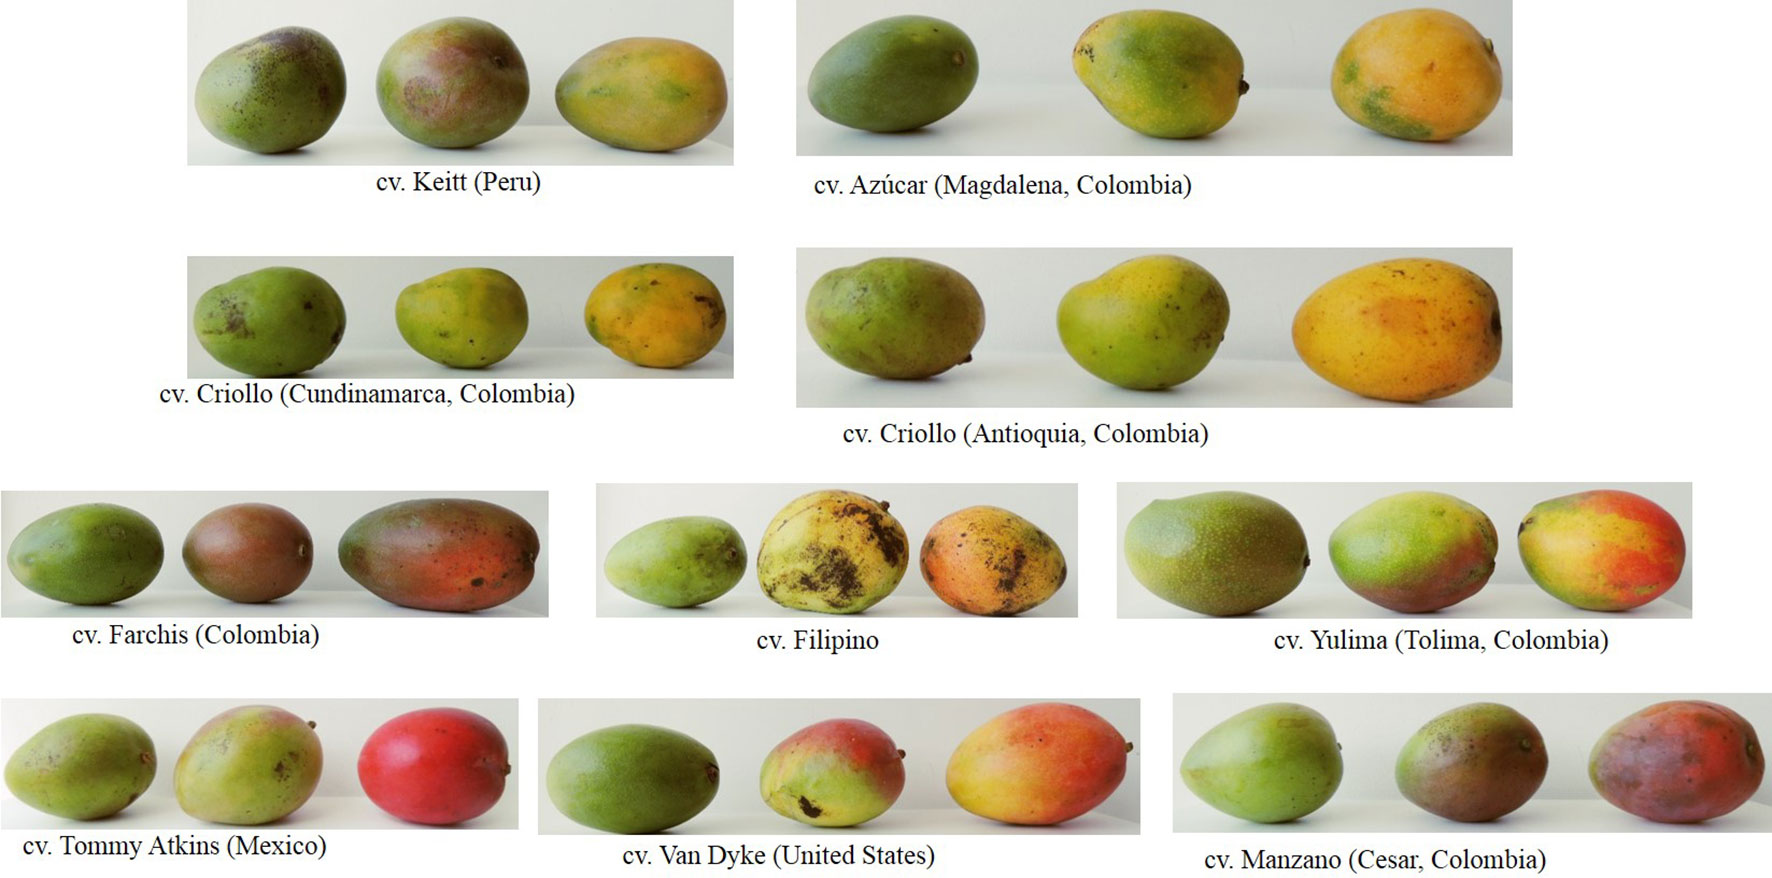 Mango - Discovered